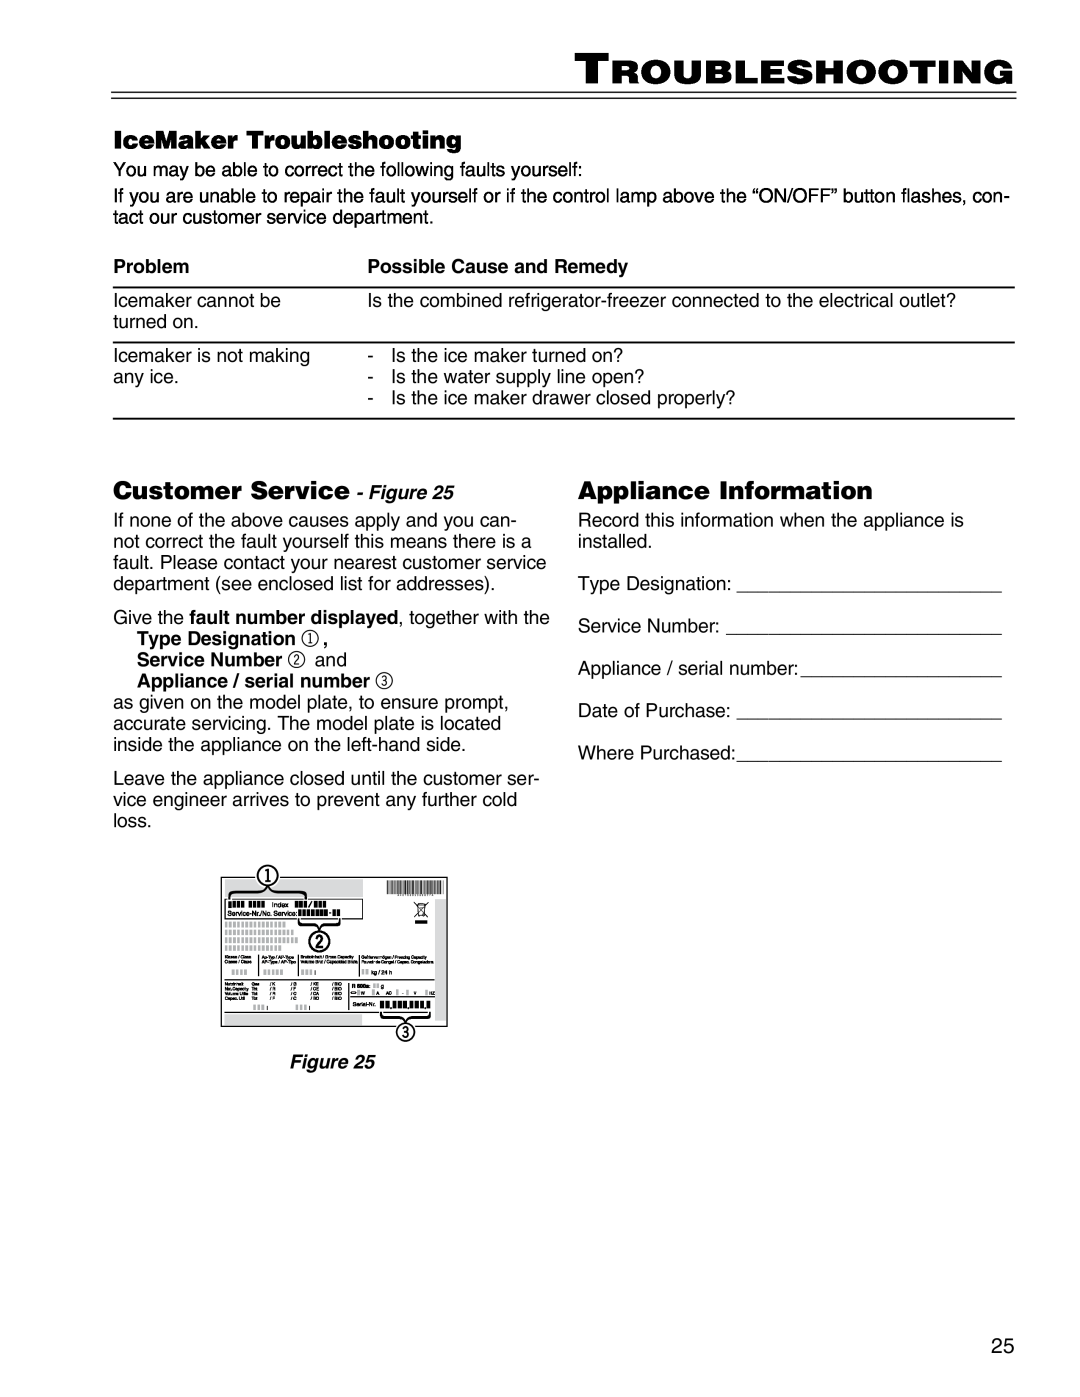 Liebherr 7081 411-01, HCS manual IceMaker Troubleshooting, Customer Service - Figure, Appliance Information 